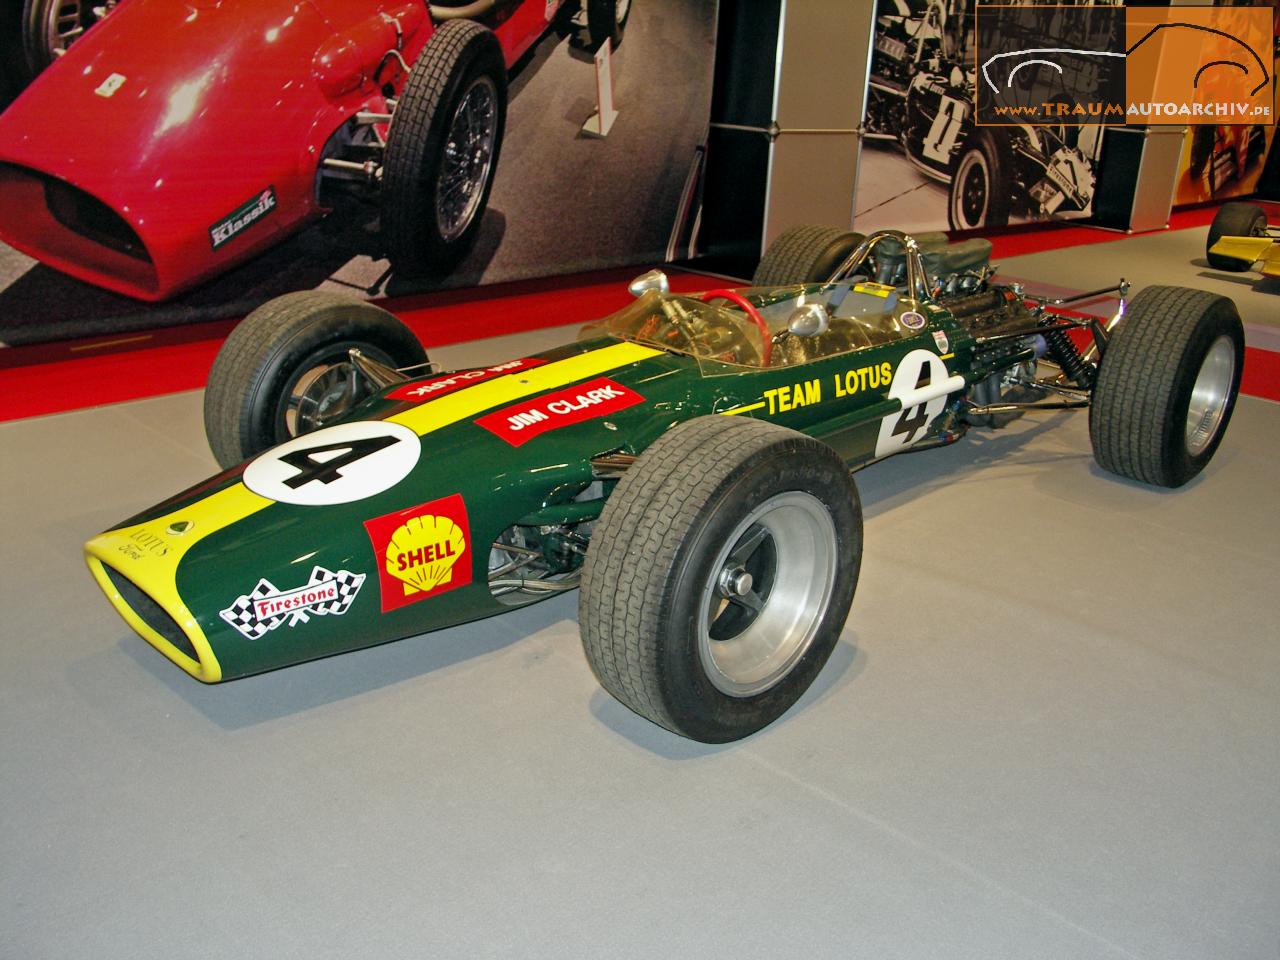 F1_Lotus-Ford 49 '1967.jpg 159.3K